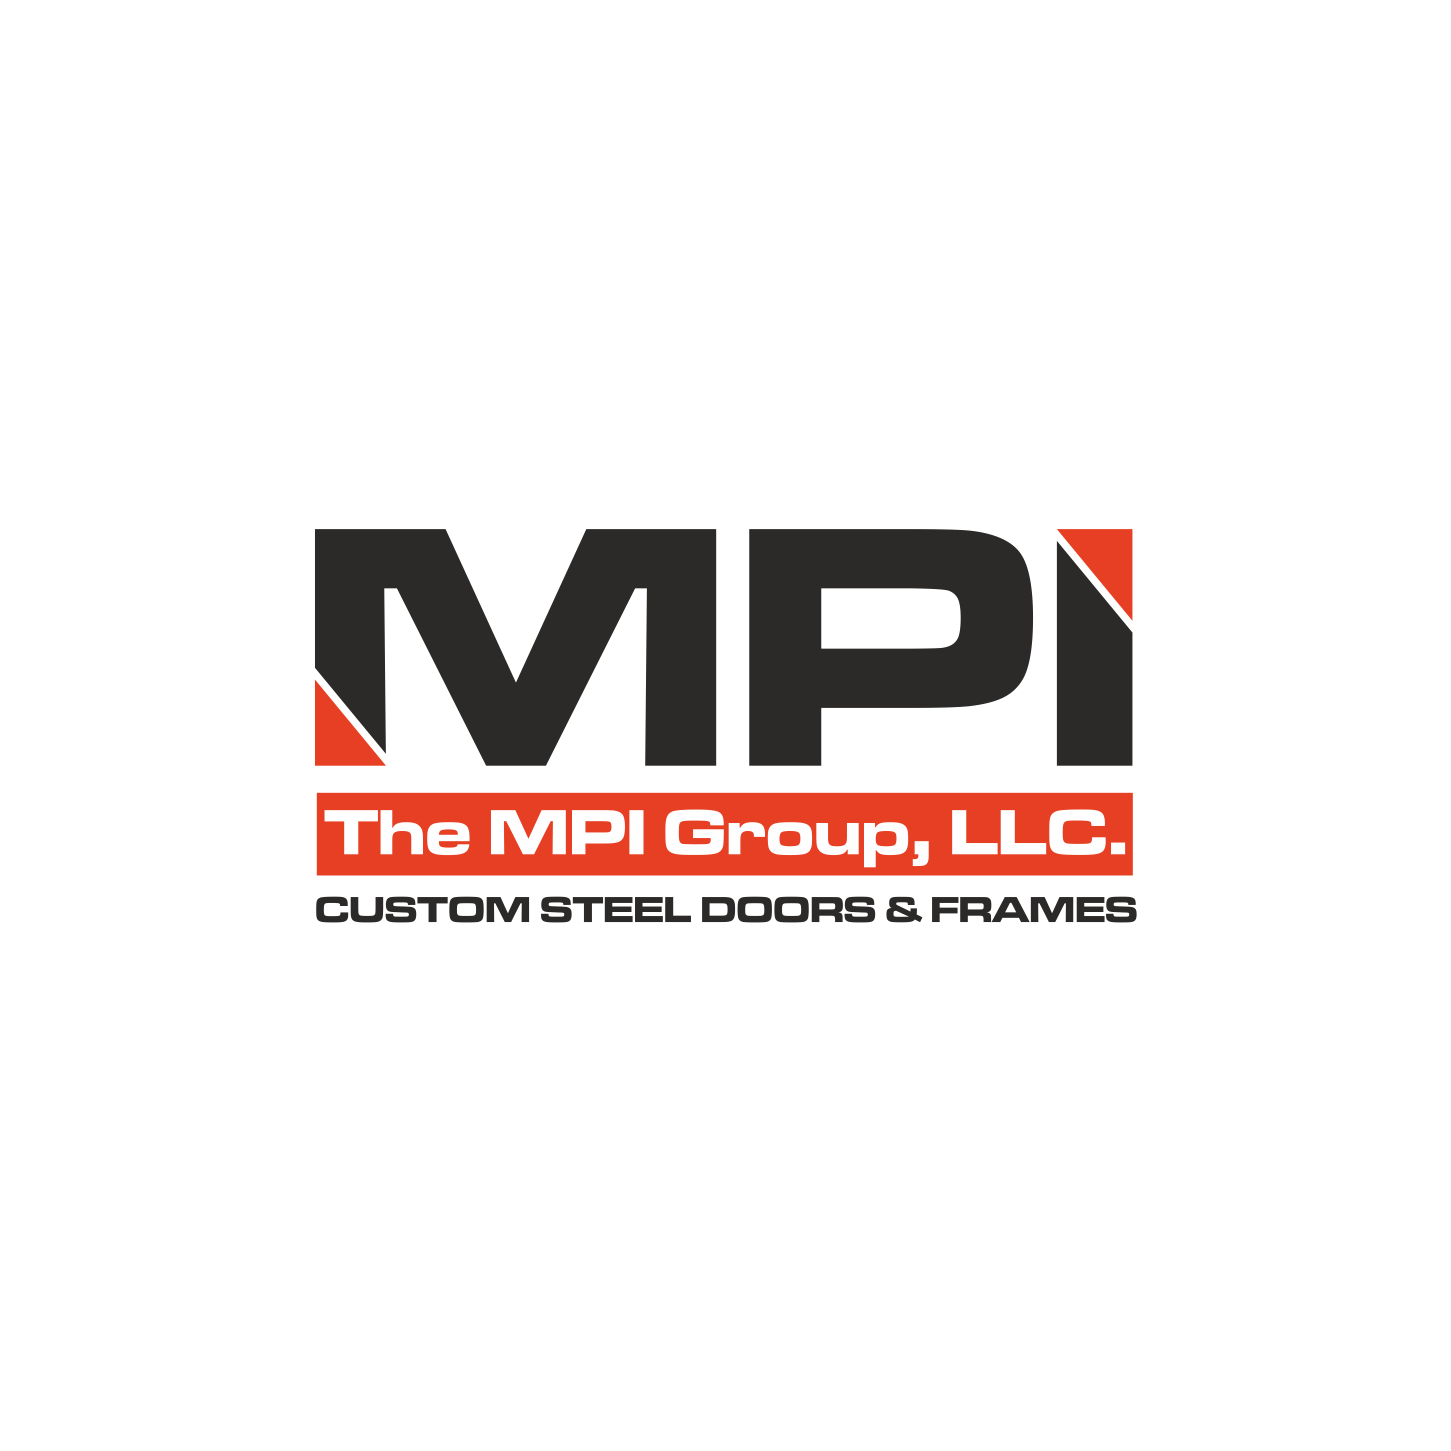 MPI Logo - Bold, Serious, Steel Fabrication Logo Design for MPI main part